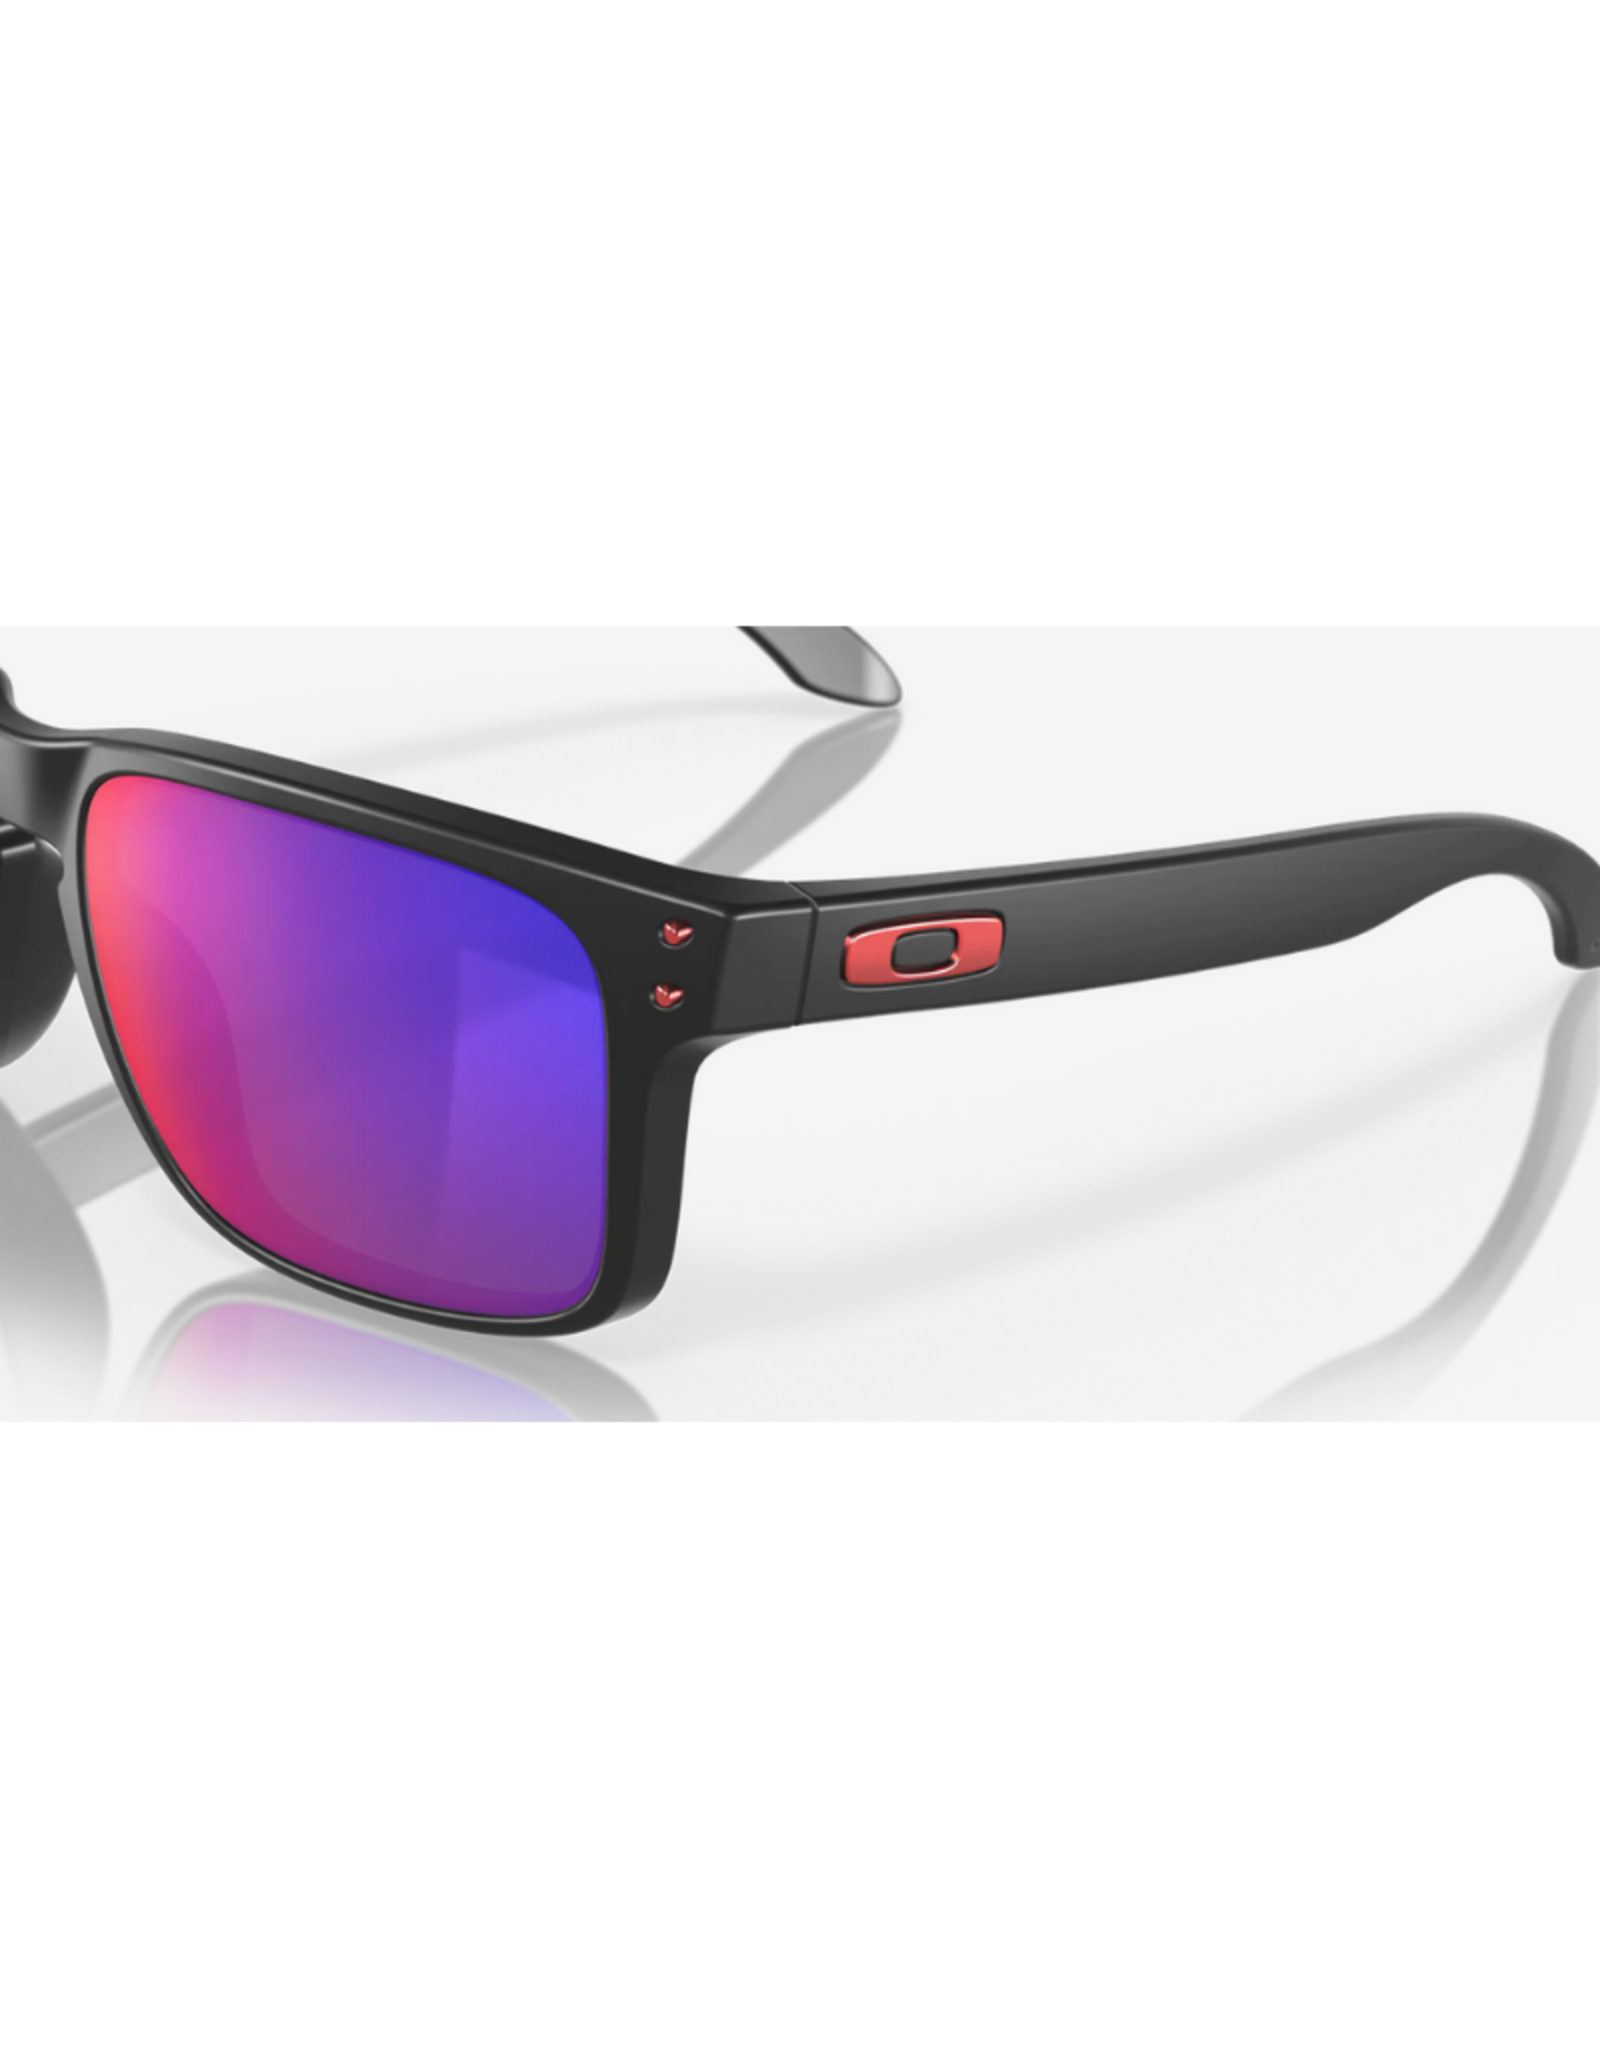 Oakley Holbrook Postitive Red Iridium Lenses Matte Black Frame Sunglasses